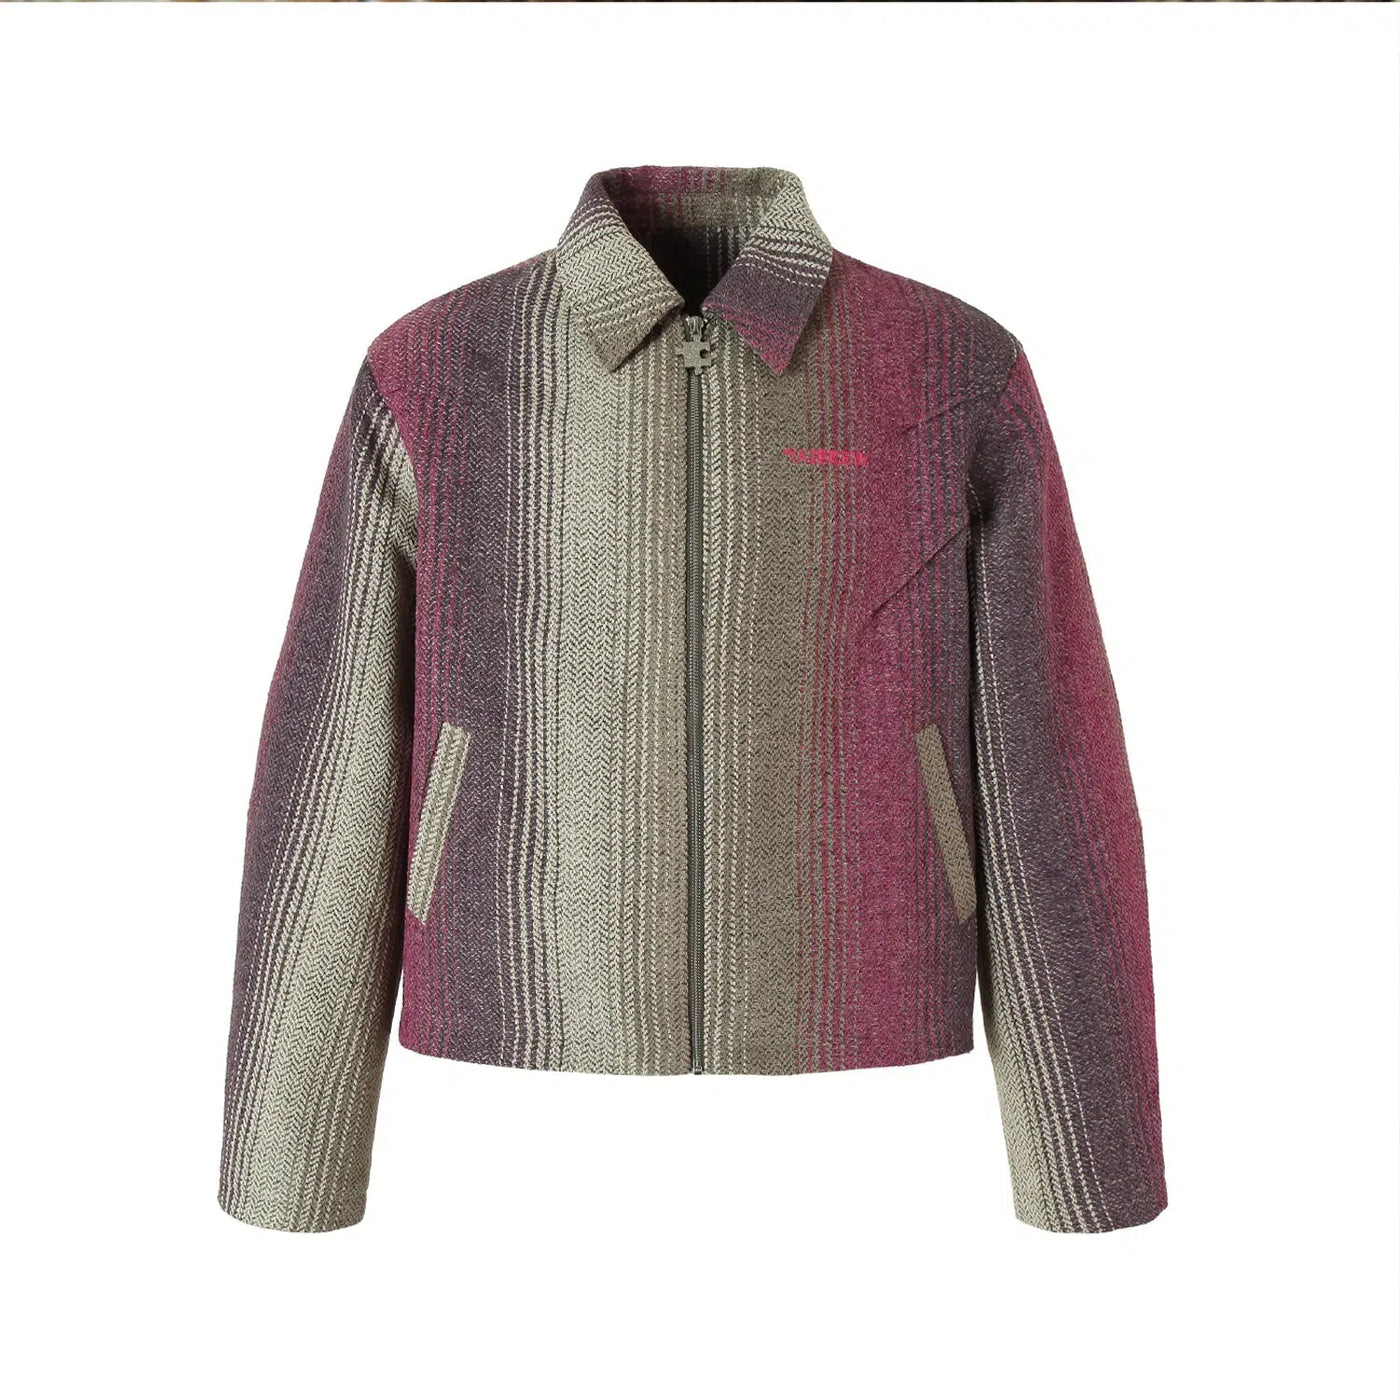 Gradient Stripes Textured Jacket Korean Street Fashion Jacket By Yad Crew Shop Online at OH Vault